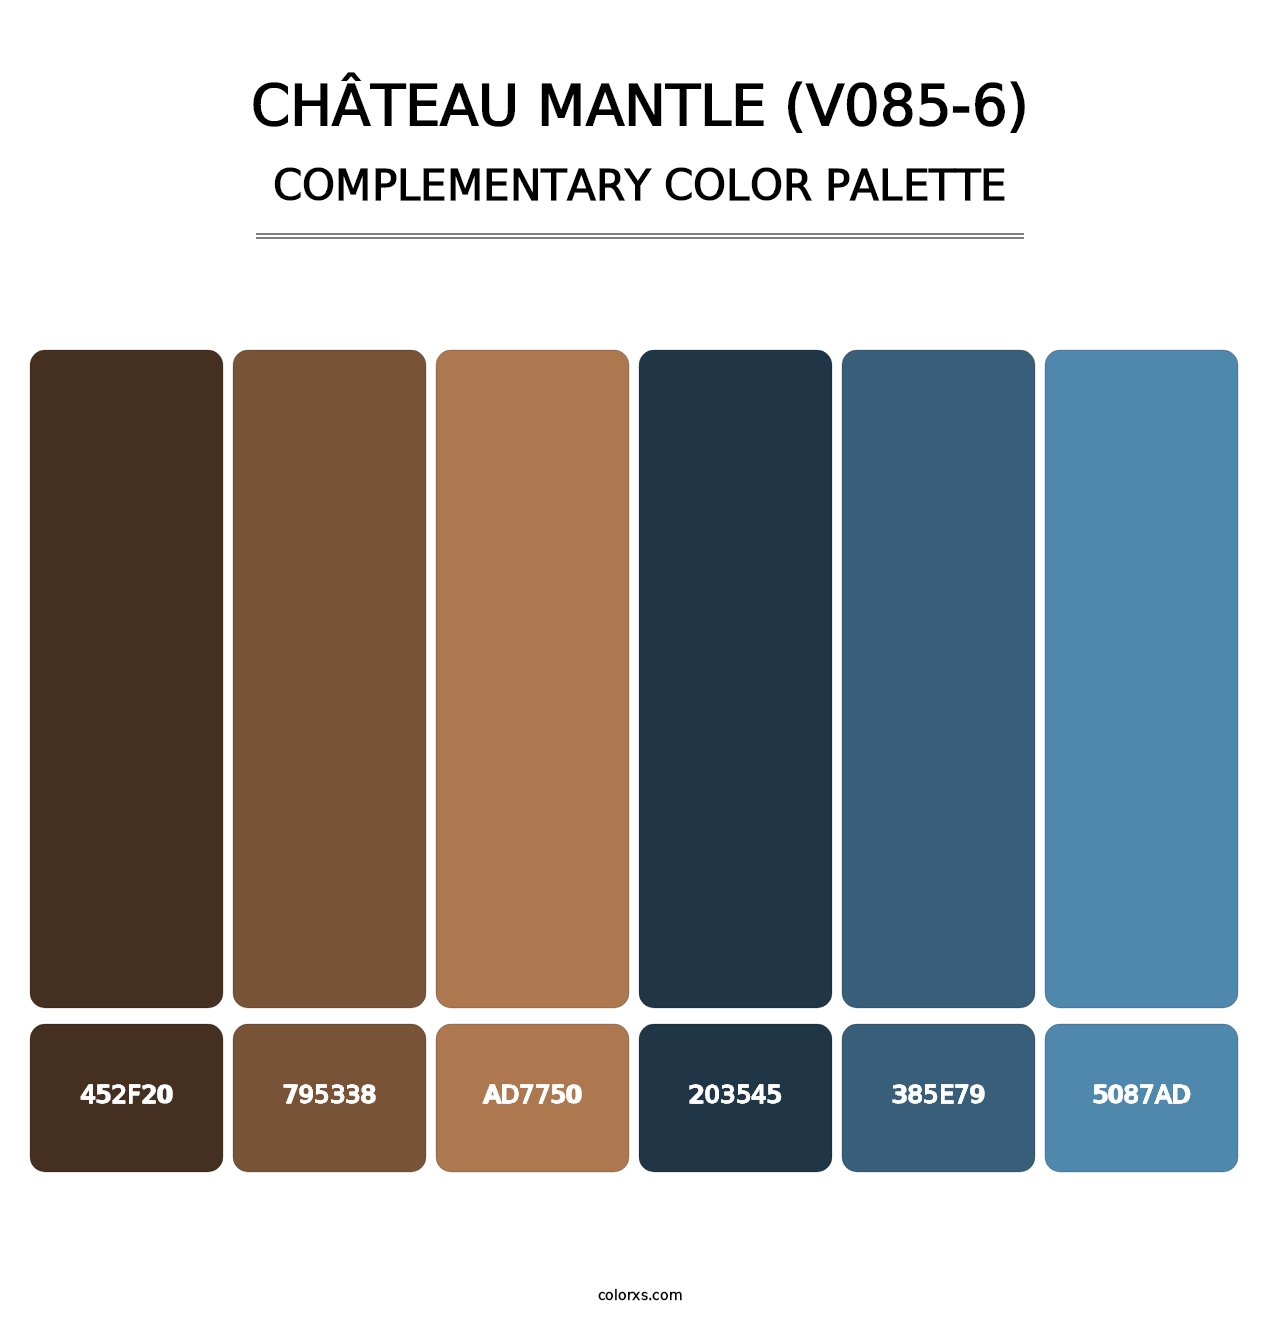 Château Mantle (V085-6) - Complementary Color Palette